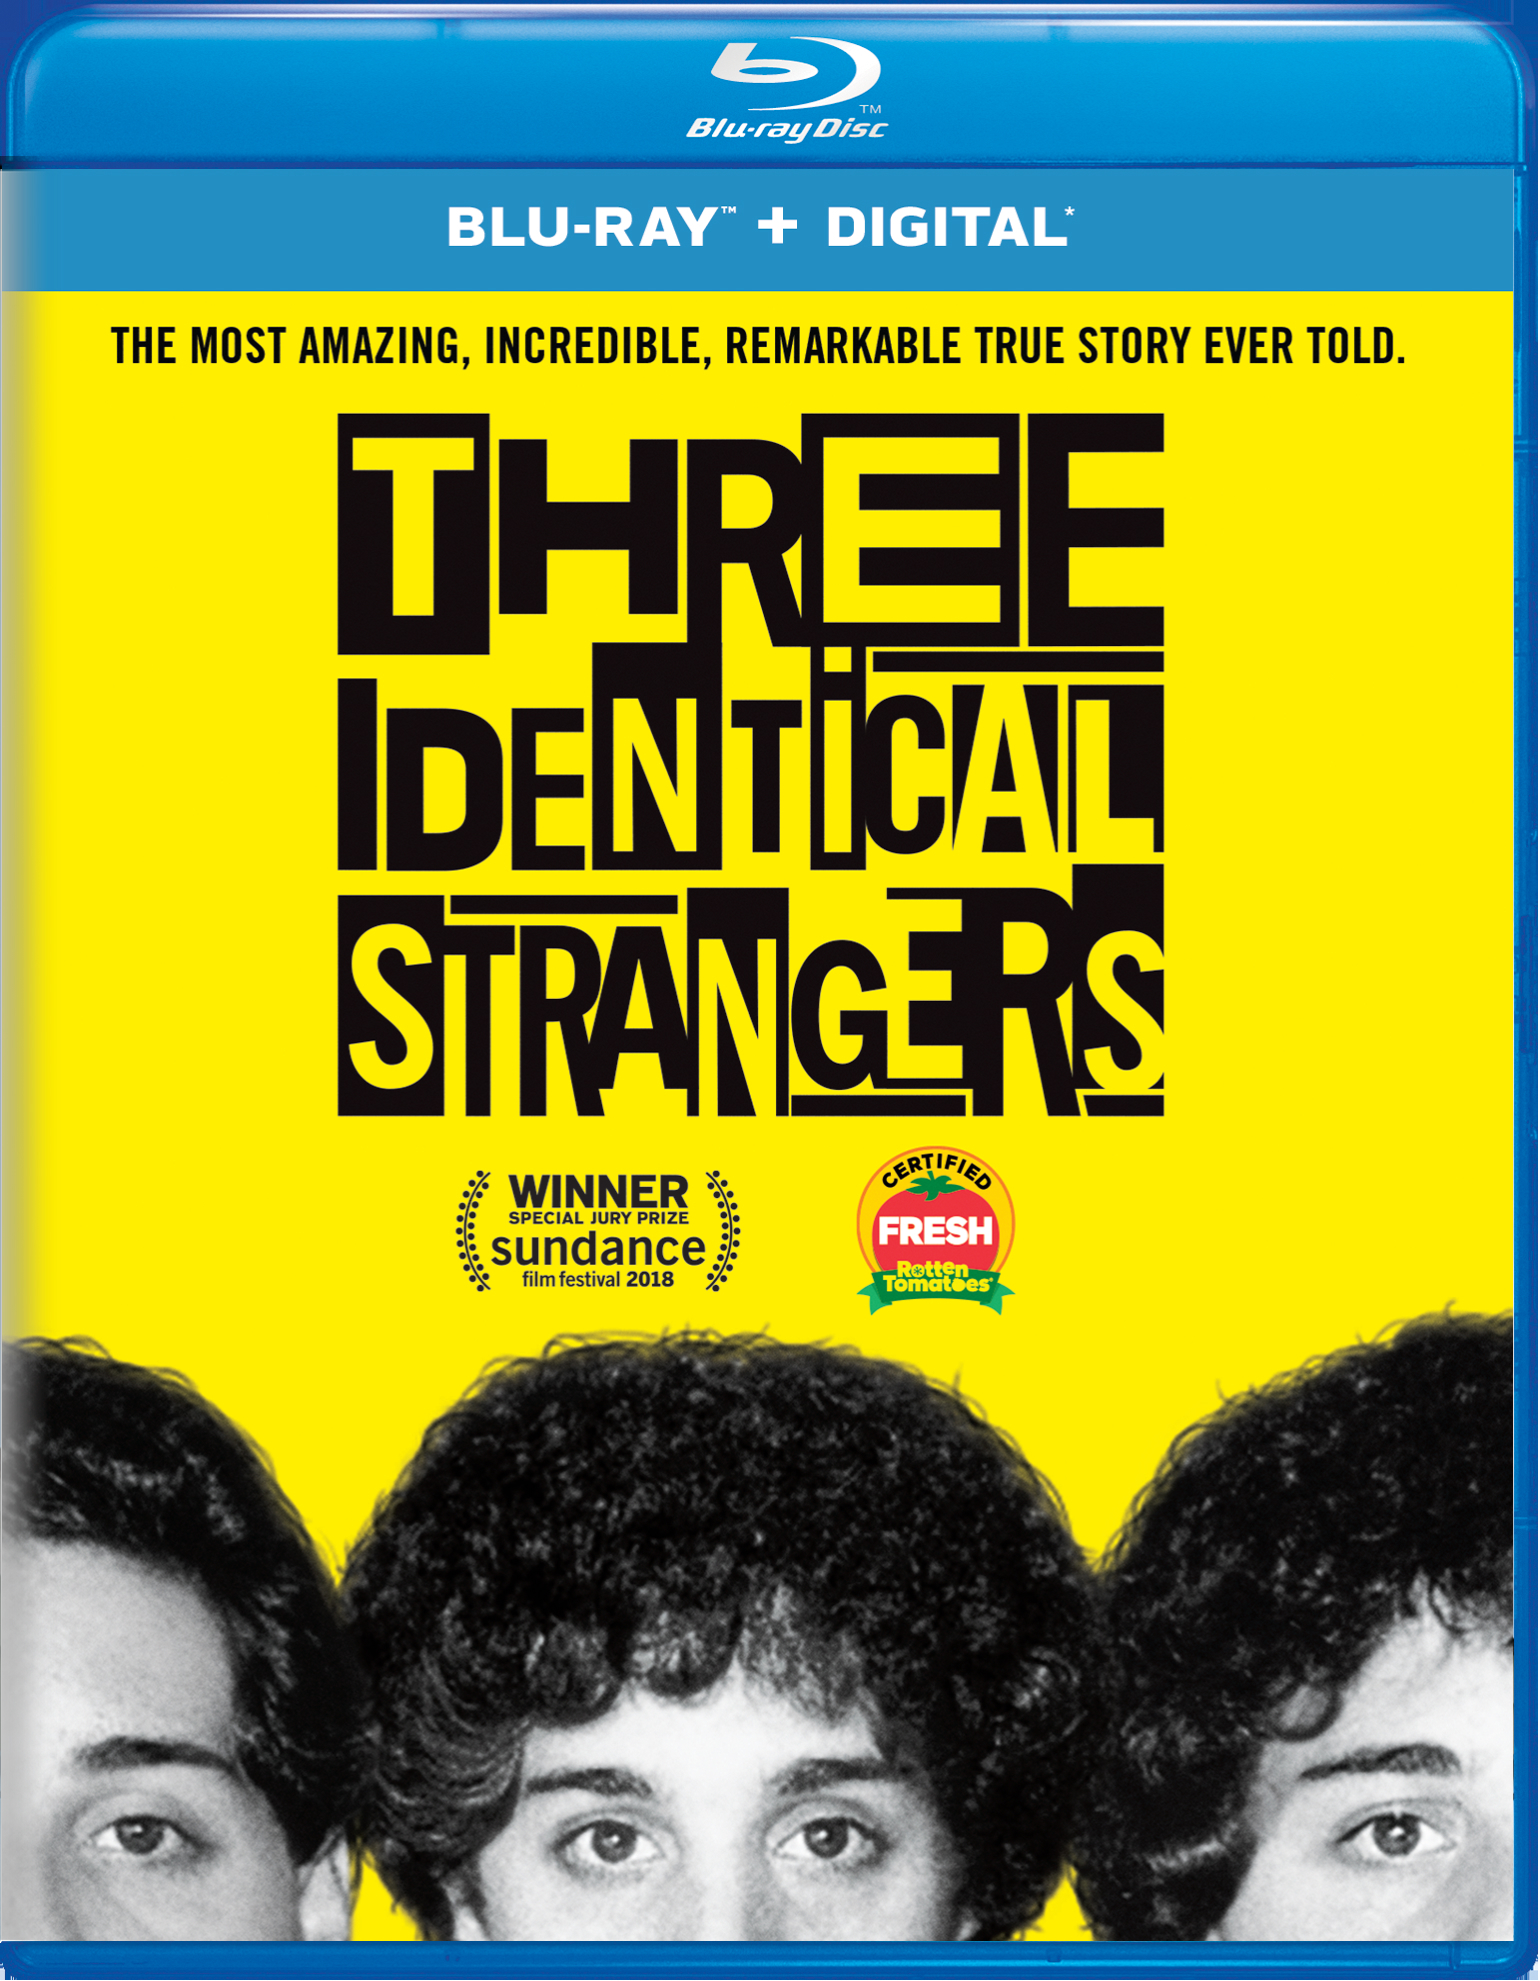 Three Identical Strangers (Blu-ray + Digital HD) - Blu-ray [ 2018 ]  - Documentaries On Blu-ray